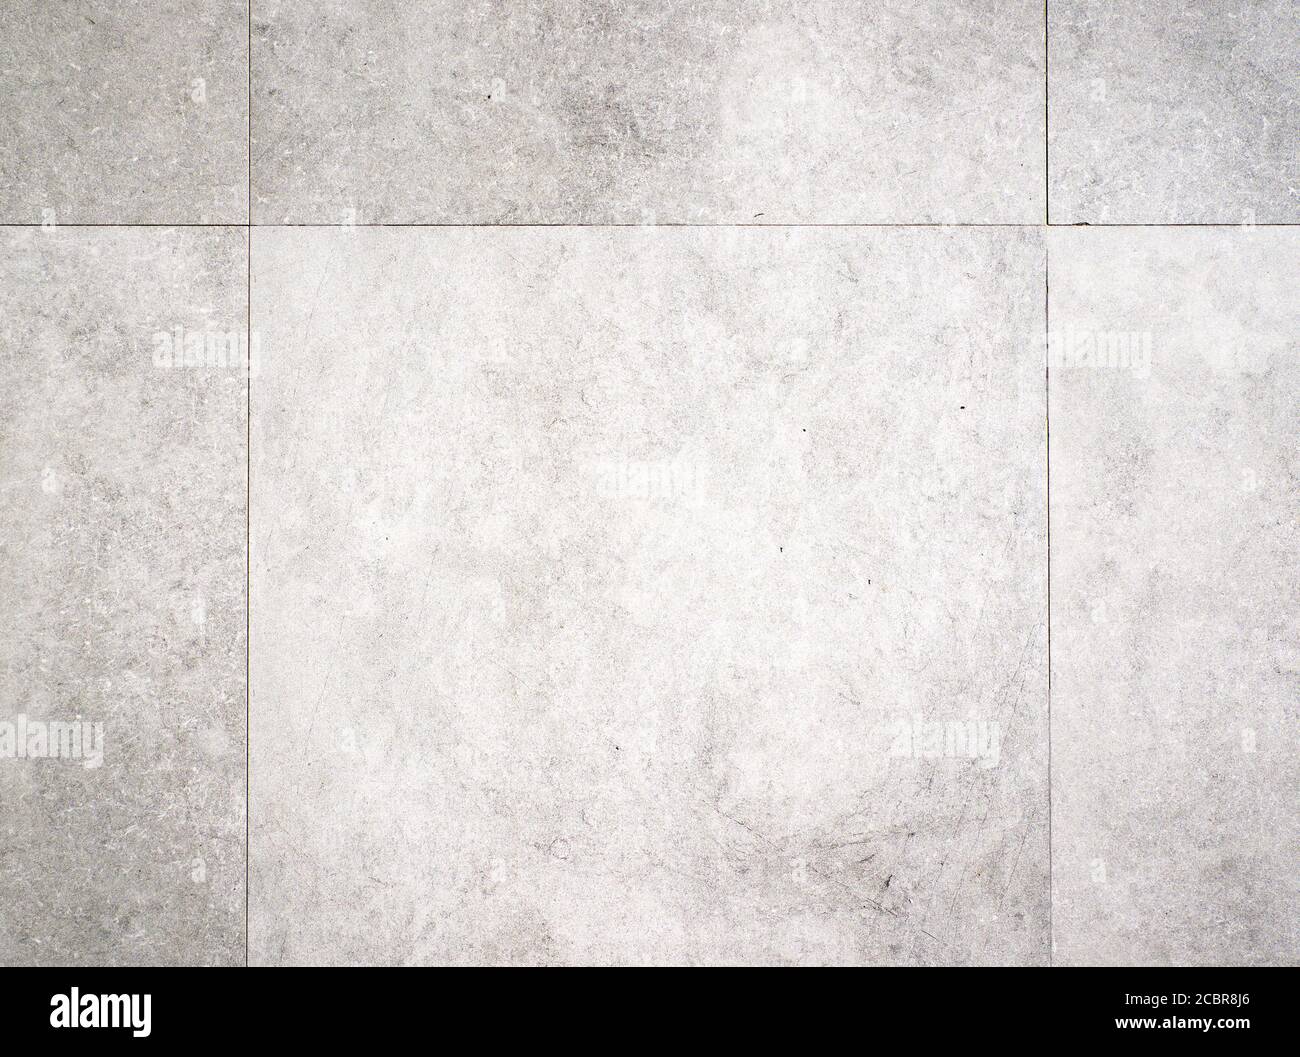 Light Grey Background Texture Of A Concrete Tile Floor Surface 2CBR8J6 